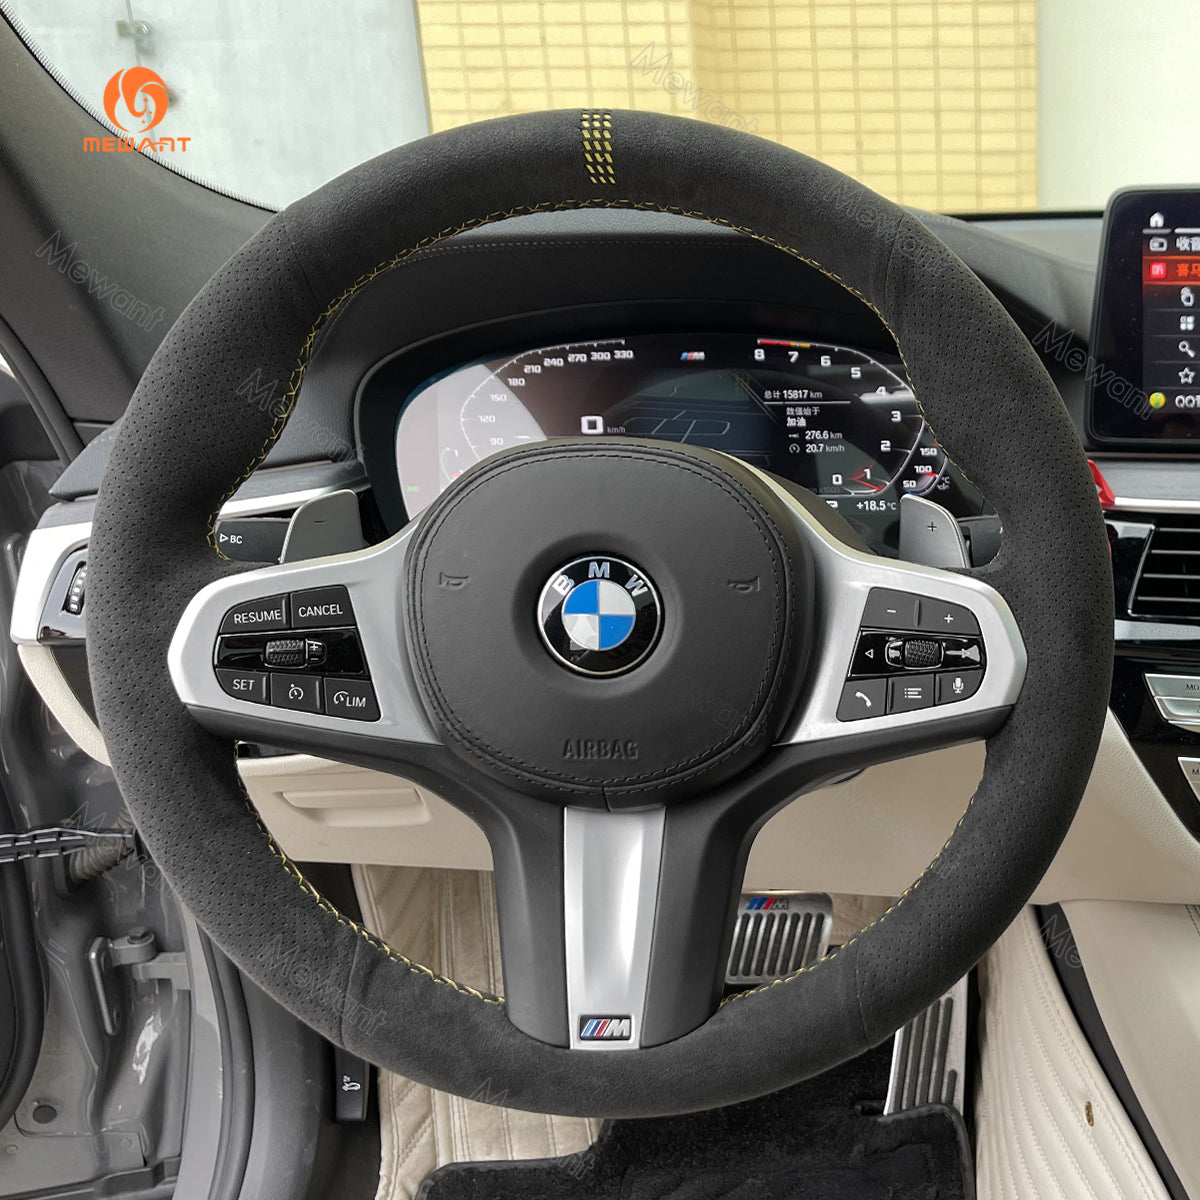 MEWANT Black Alcantara Car Steering Wheel Cover for BMW G20 F44 G22 G2 –  Mewant steering wheel cover